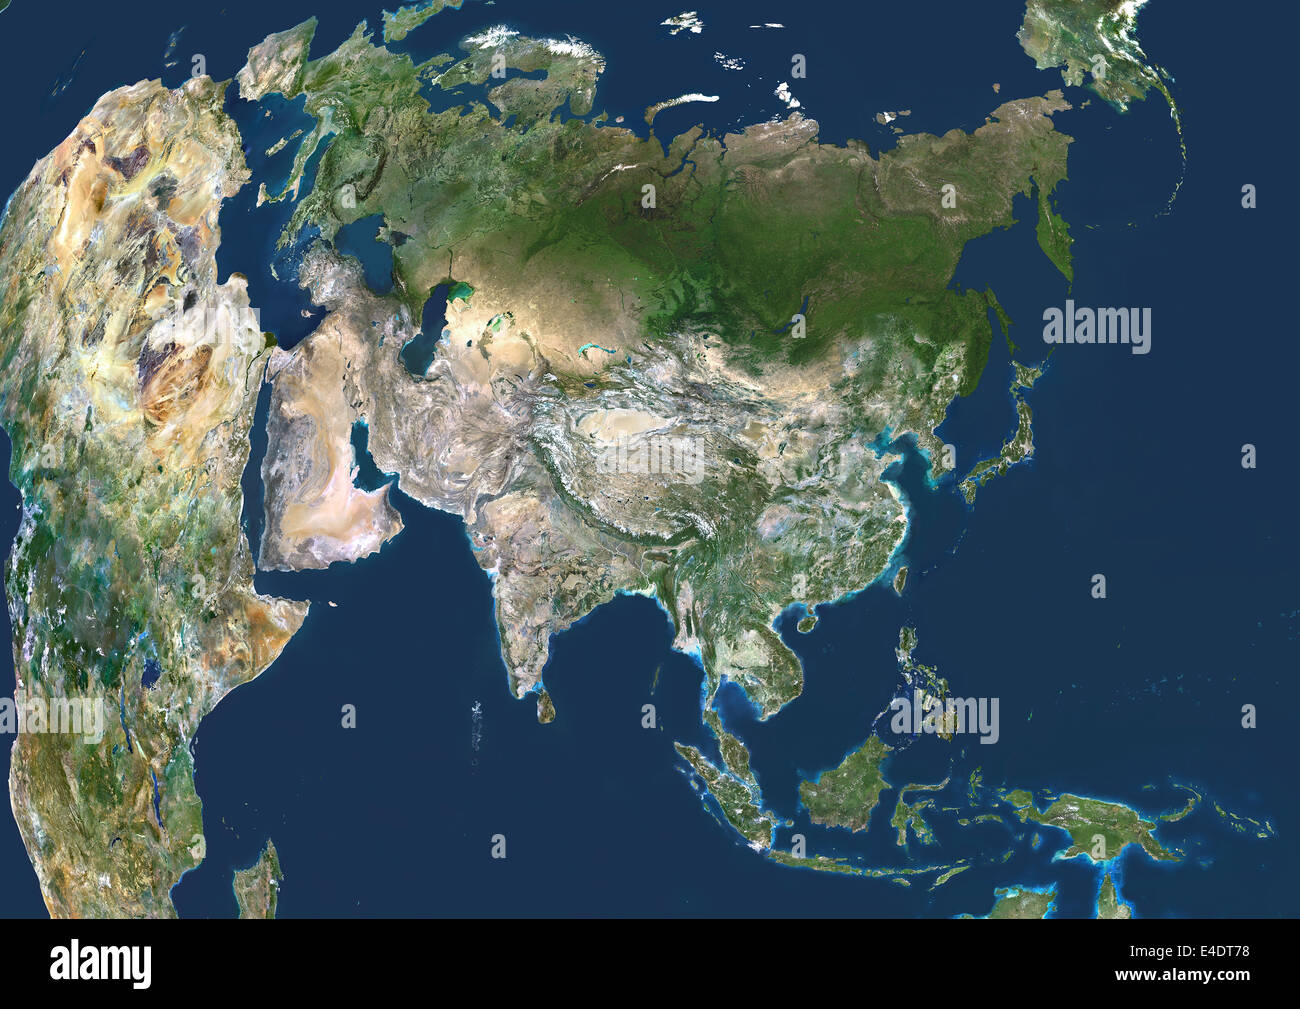 Asien, Echtfarben-Satellitenbild. Asien. Echtfarben-Satellitenbild Mittelpunkt Asiens, mit fast ganz Afrika (unten links) und Stockfoto